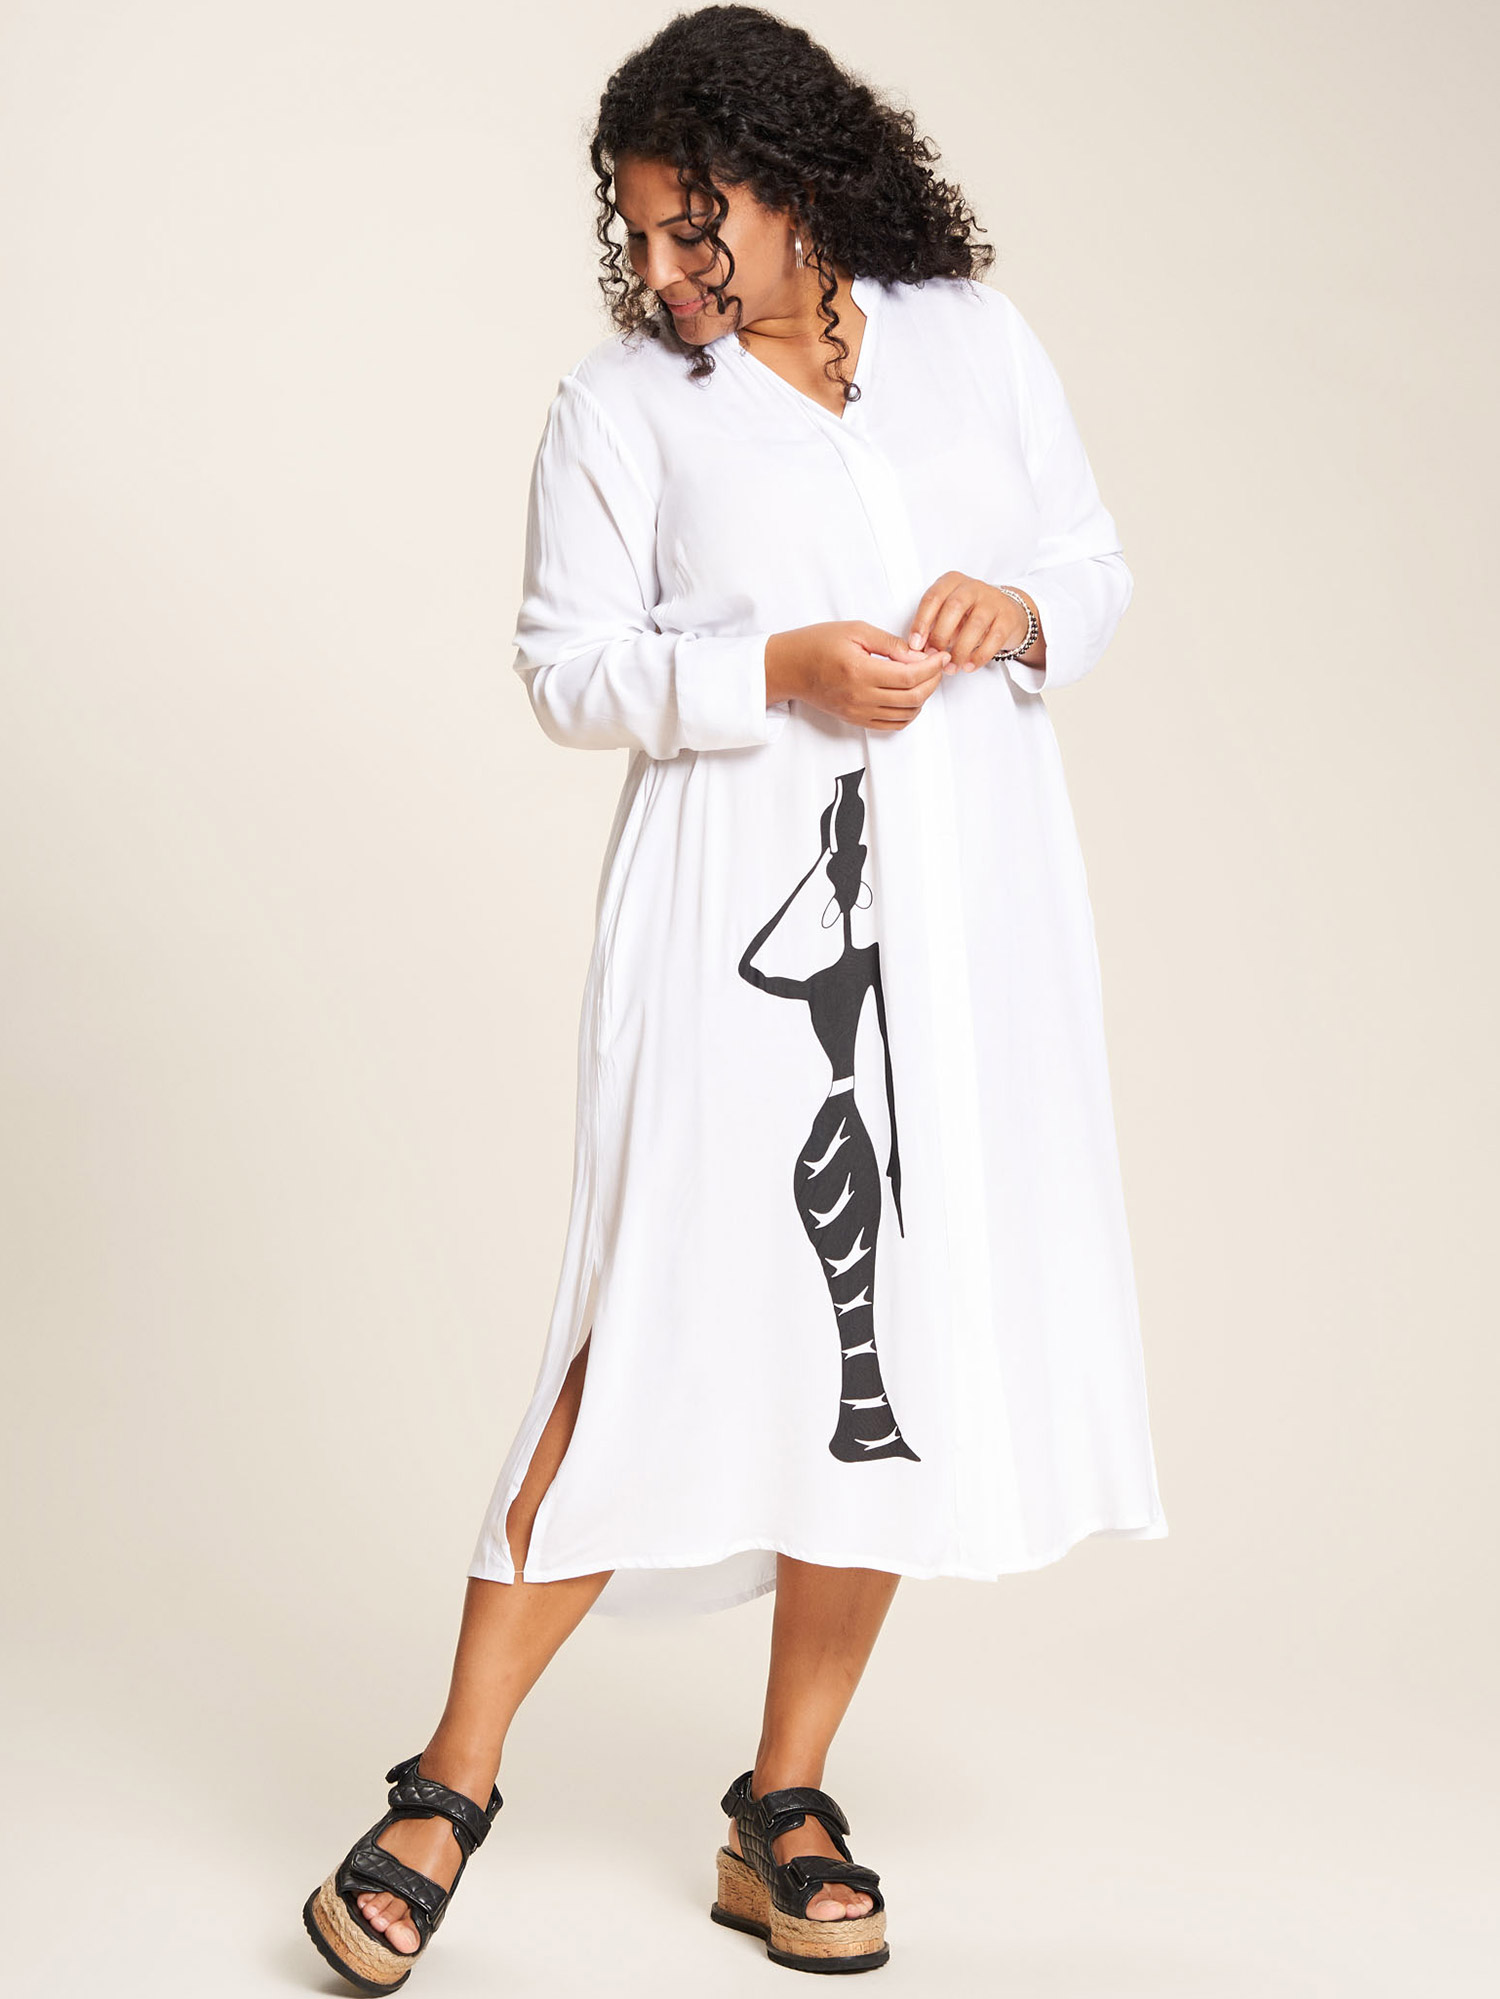 Jean - Flot hvid viskose skjorte kjole med sort tryk fra Studio